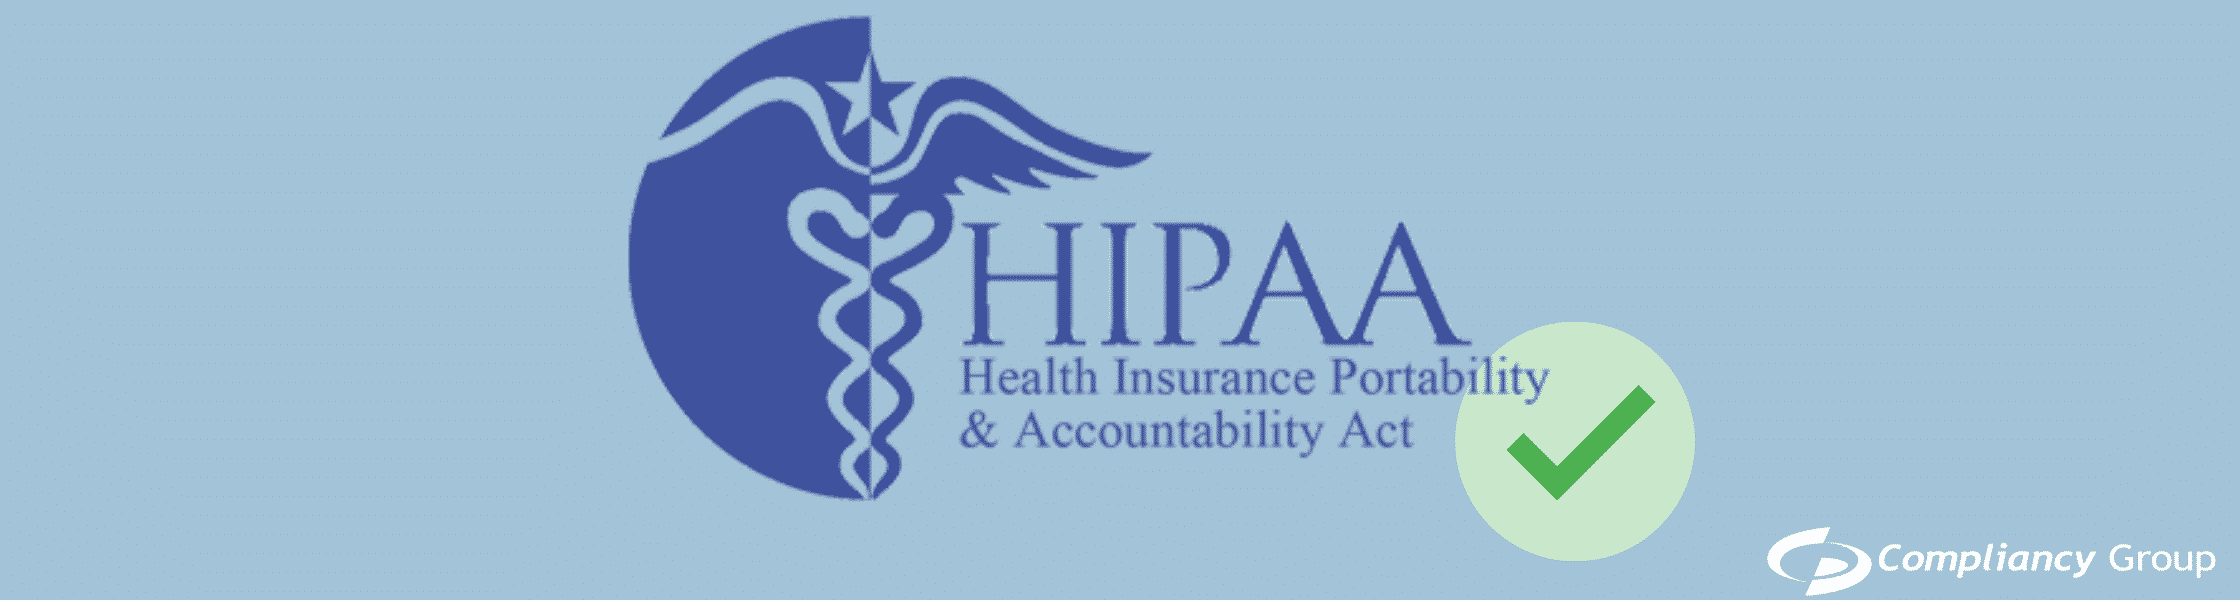 benefits of HIPAA